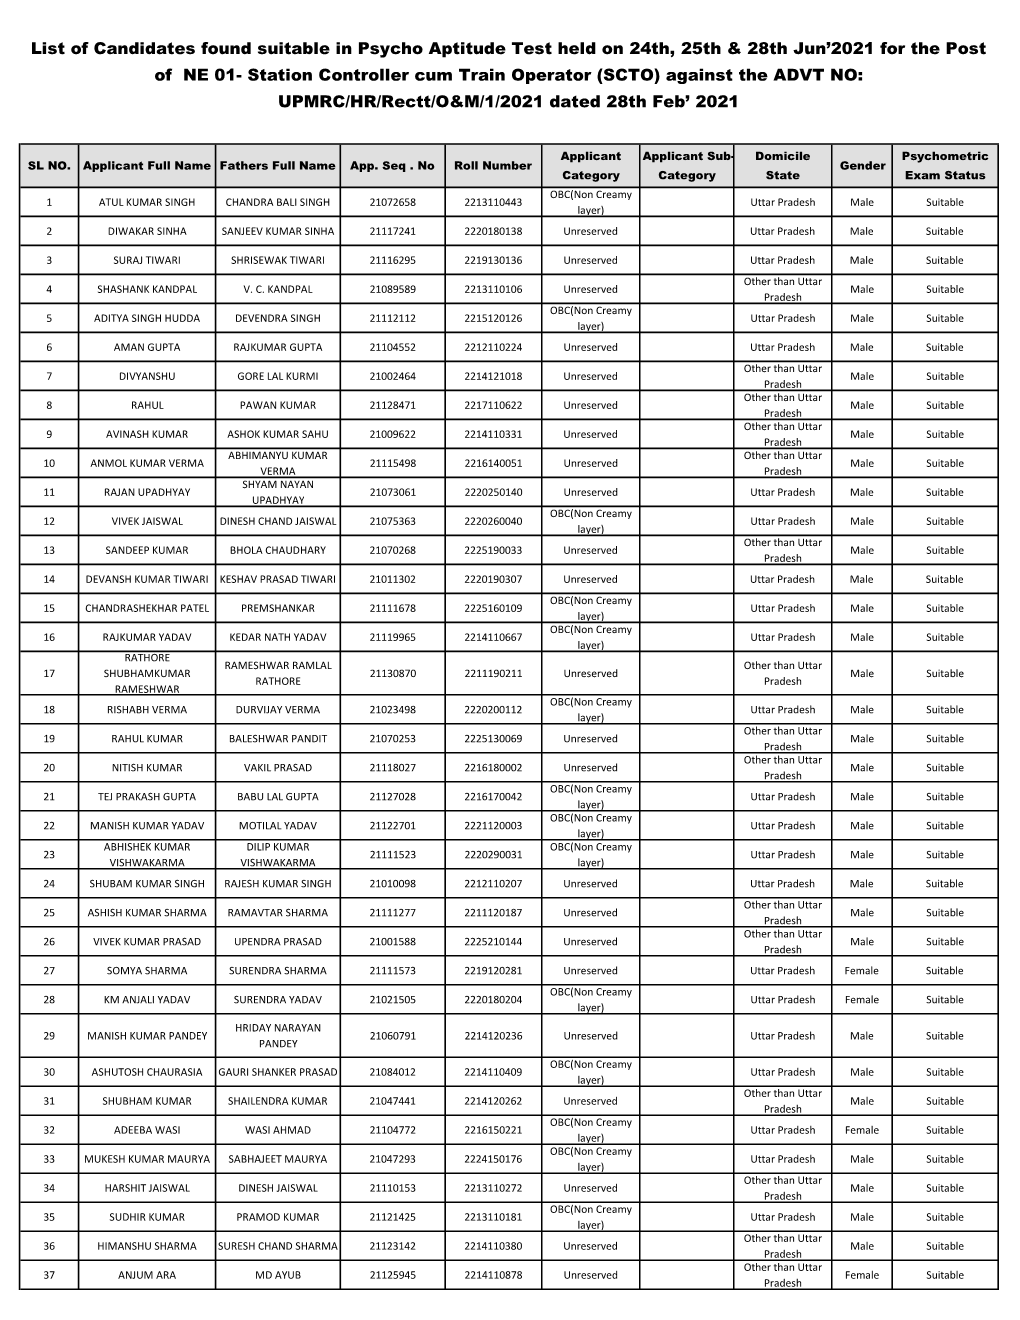 List of Candidates Qualified in Psycho Aptitude Test.Xlsx